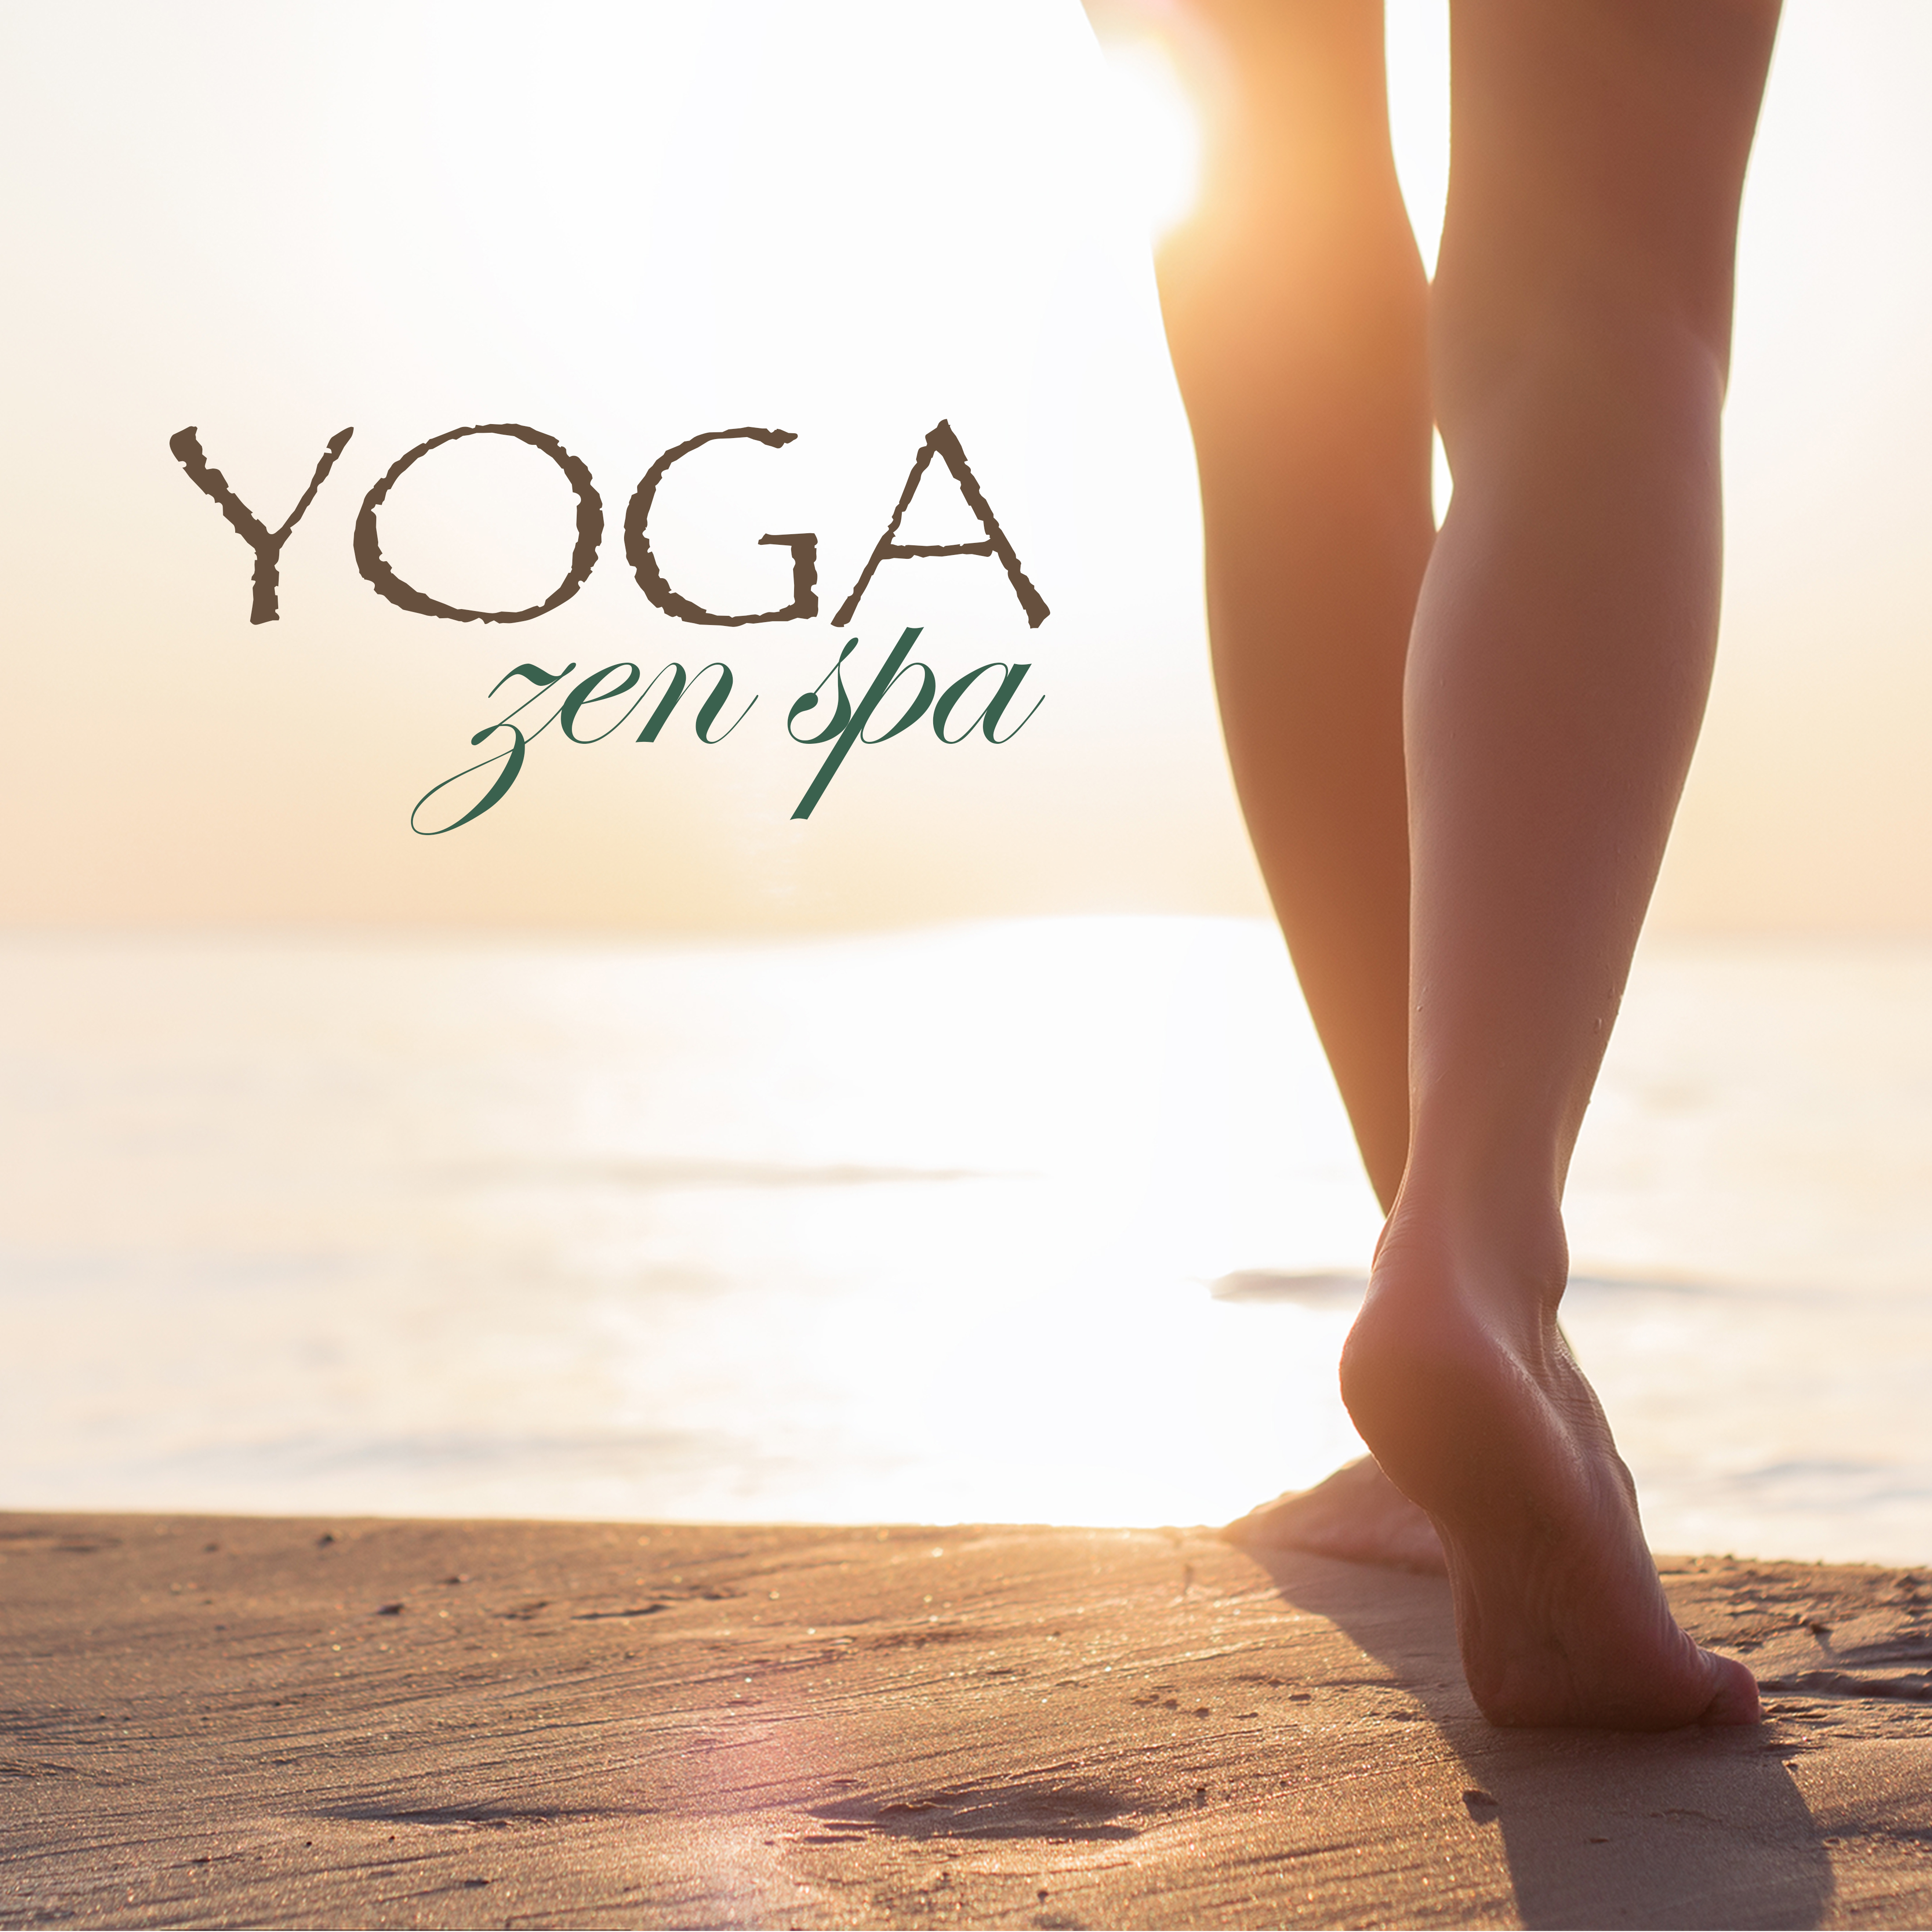 Yoga Zen Spa  Amazing New Age Music for Meditation, Relaxing Massage  Yoga Retreats